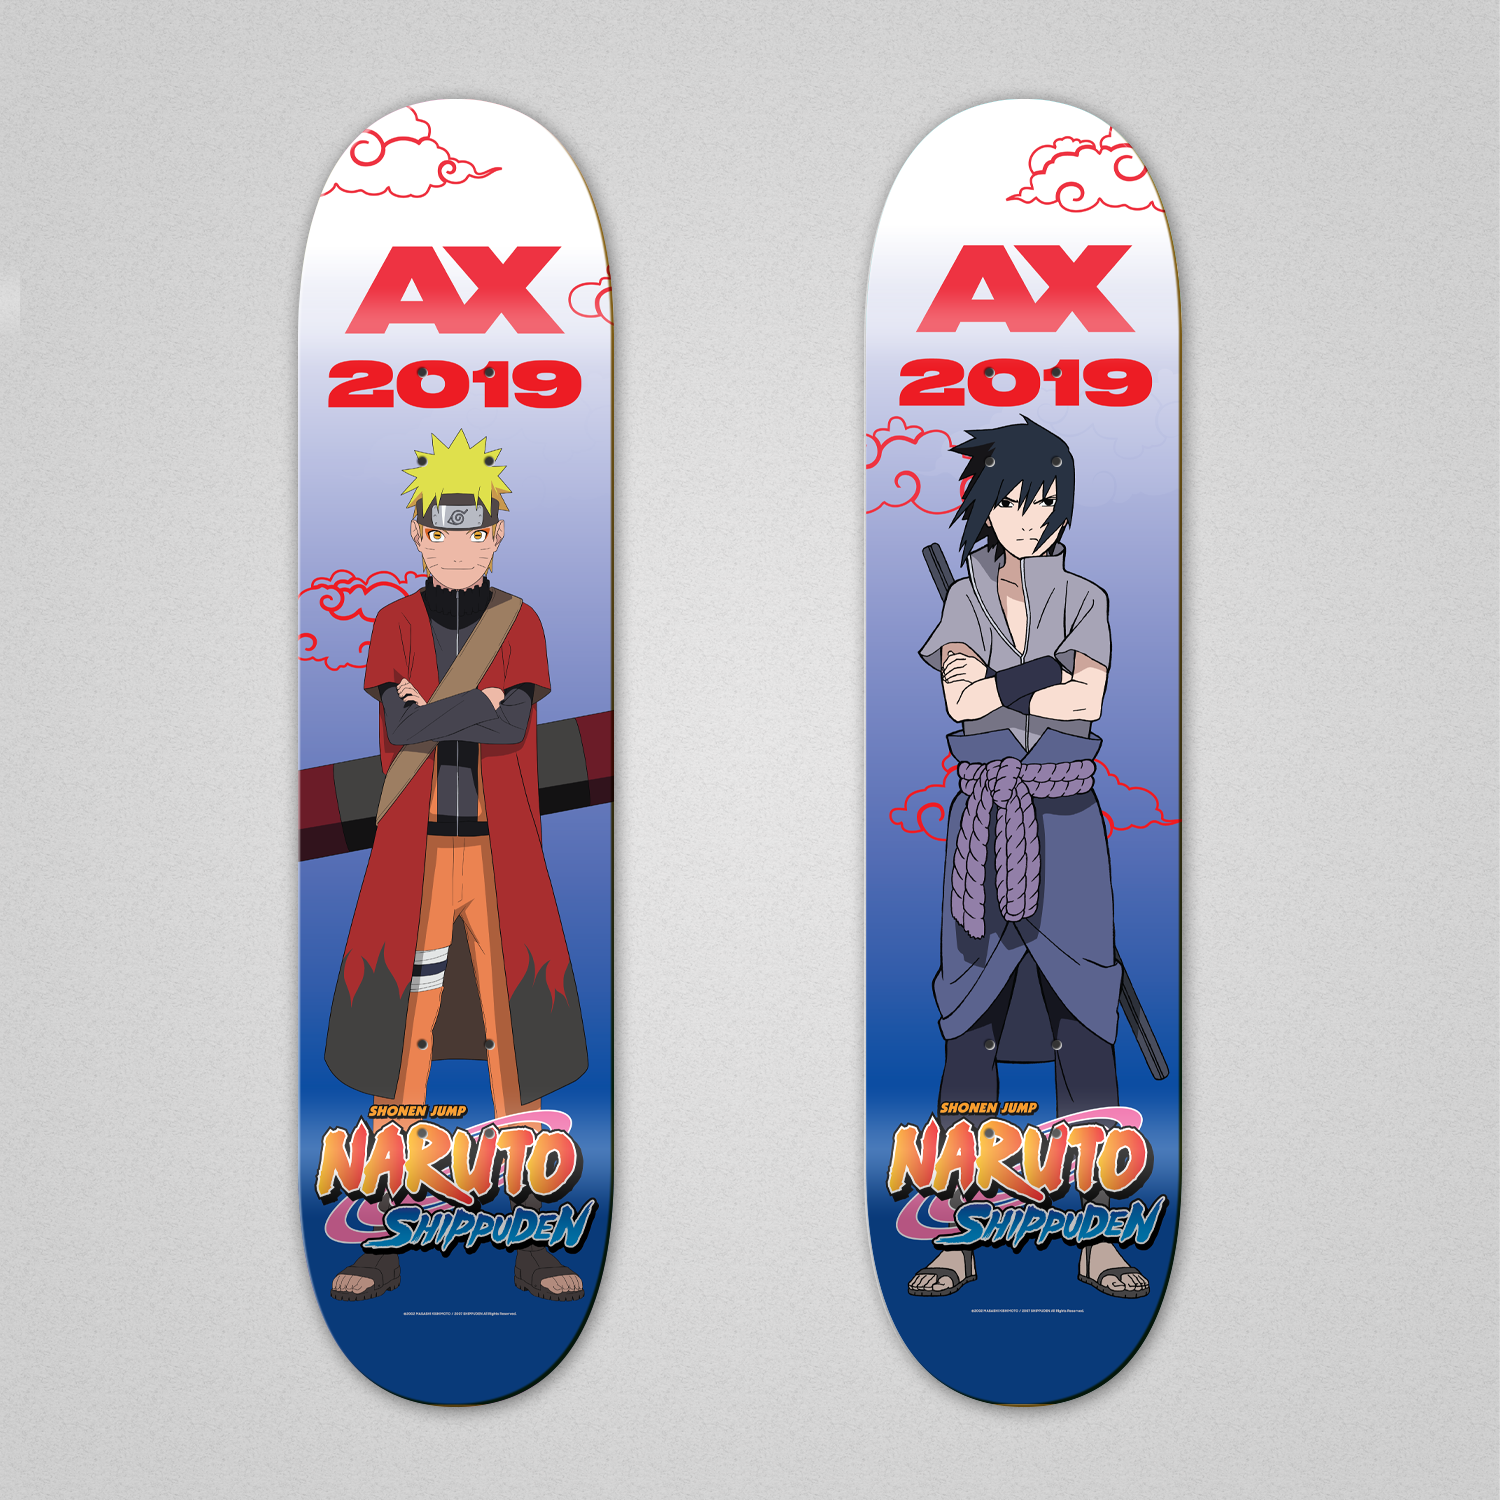 2019 - AX - Naruto Skate Deck Promo Image - Anime Expo